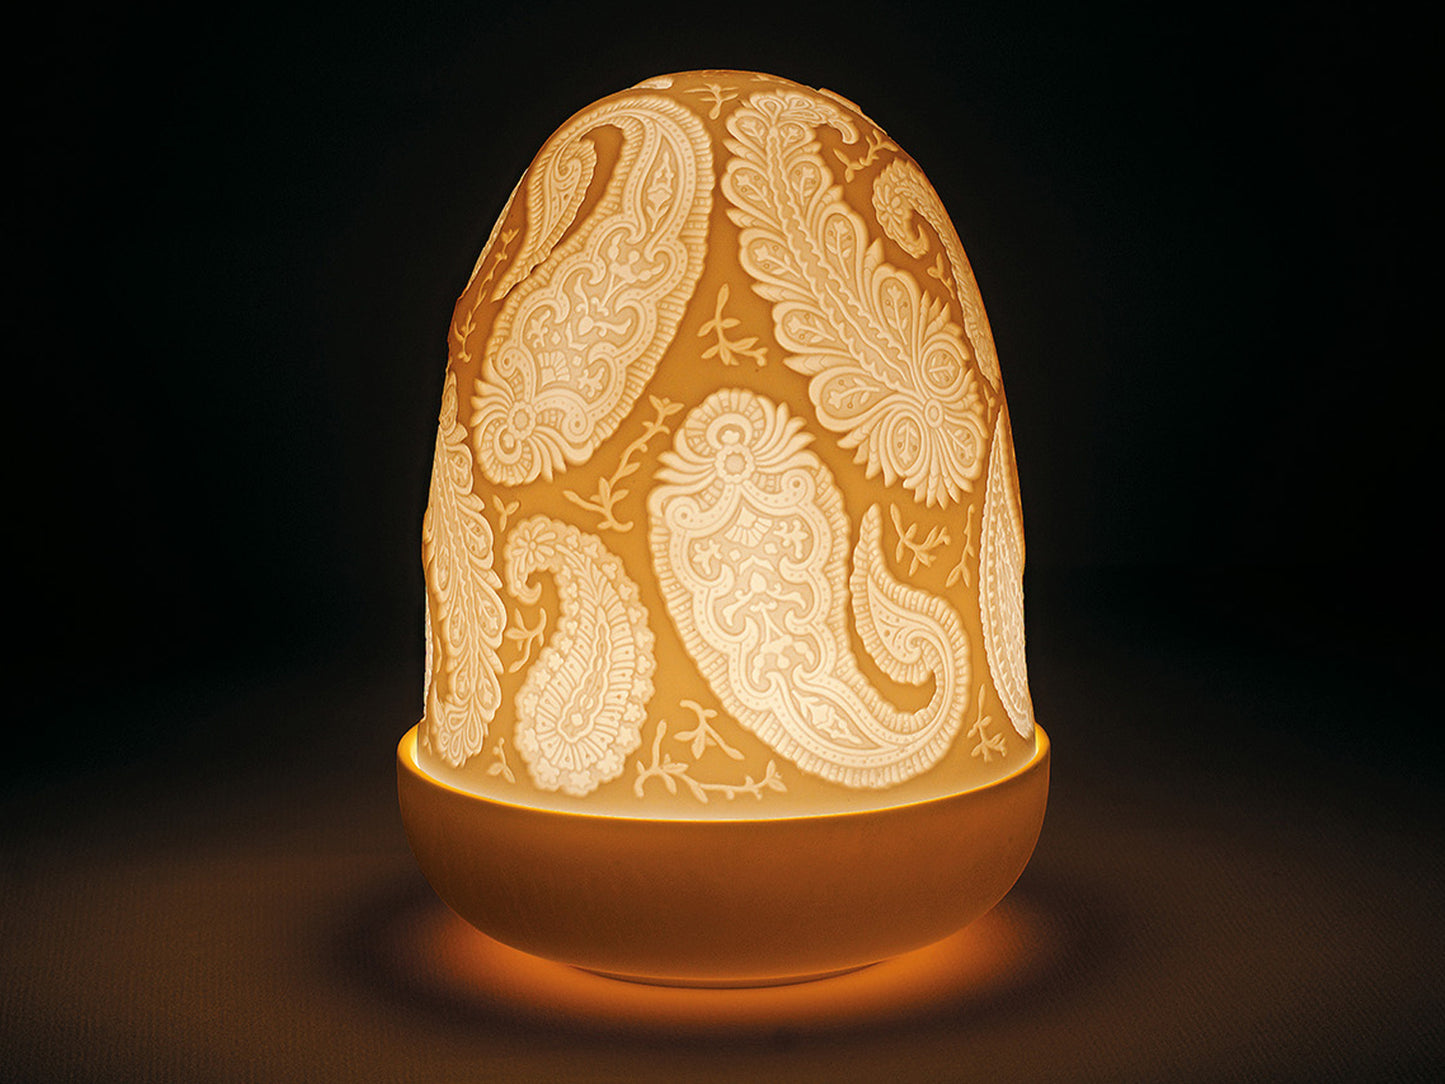 Lladro Dome Lamp - Paisley